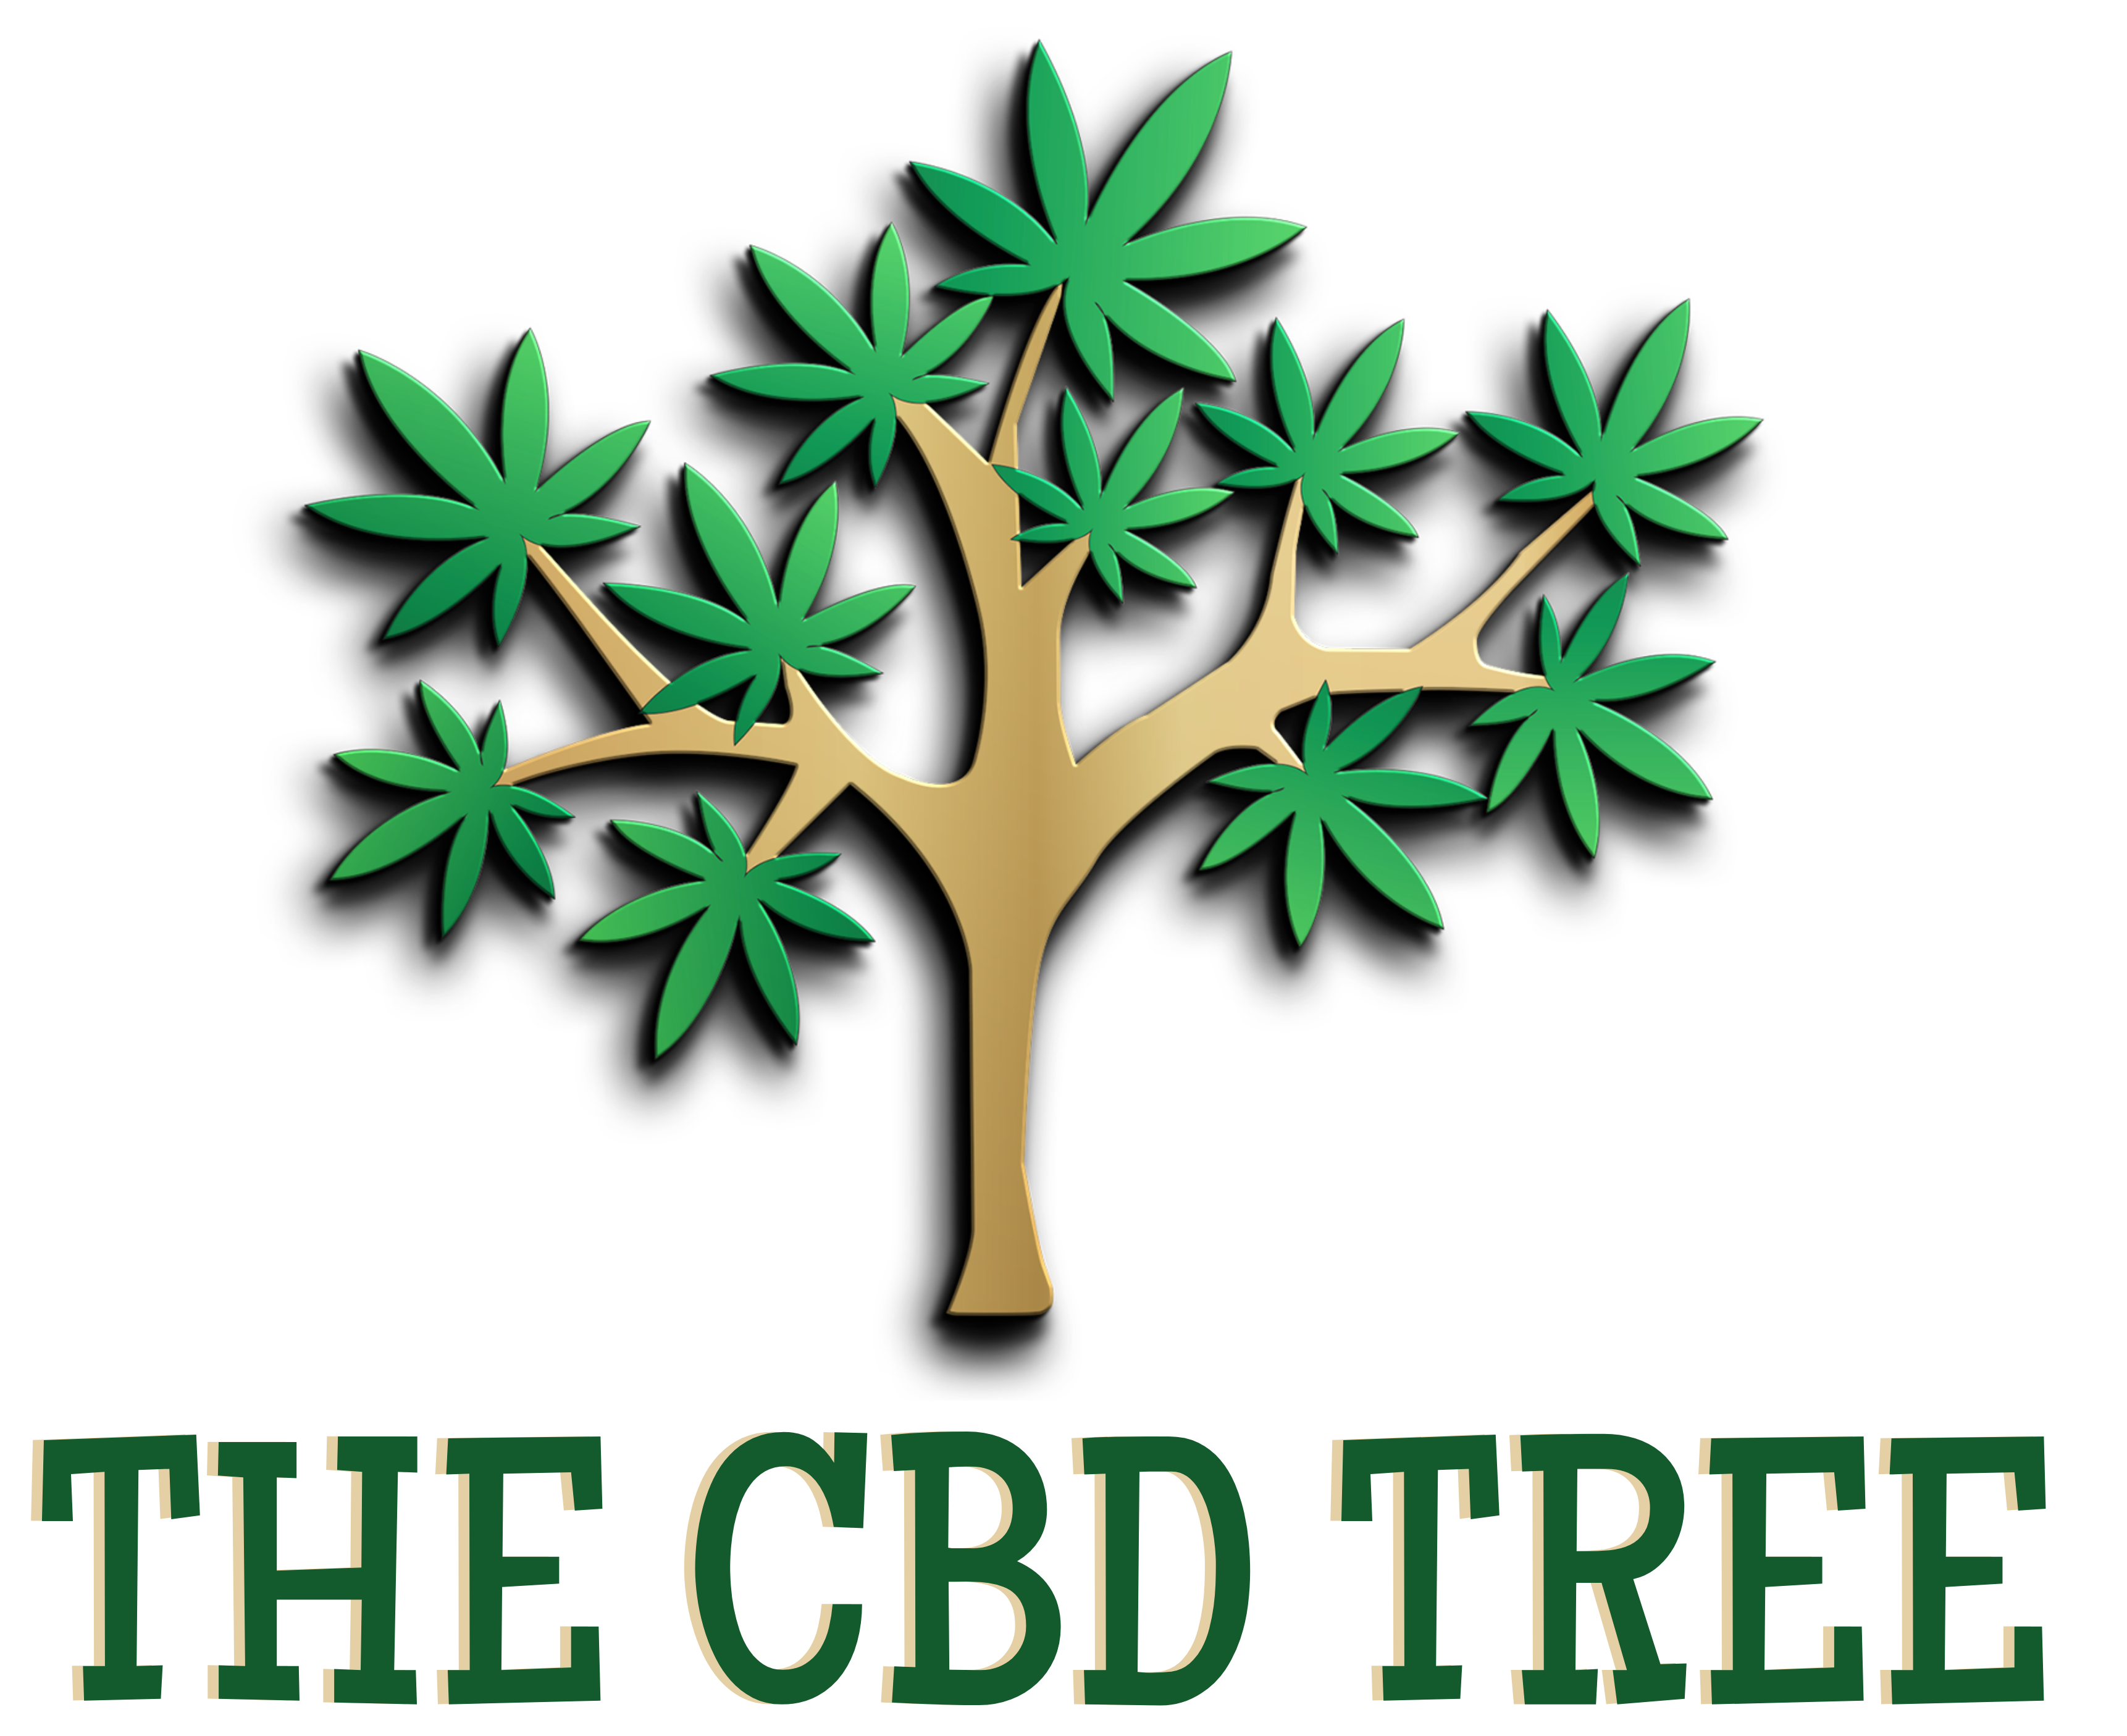 THE CBD TREE